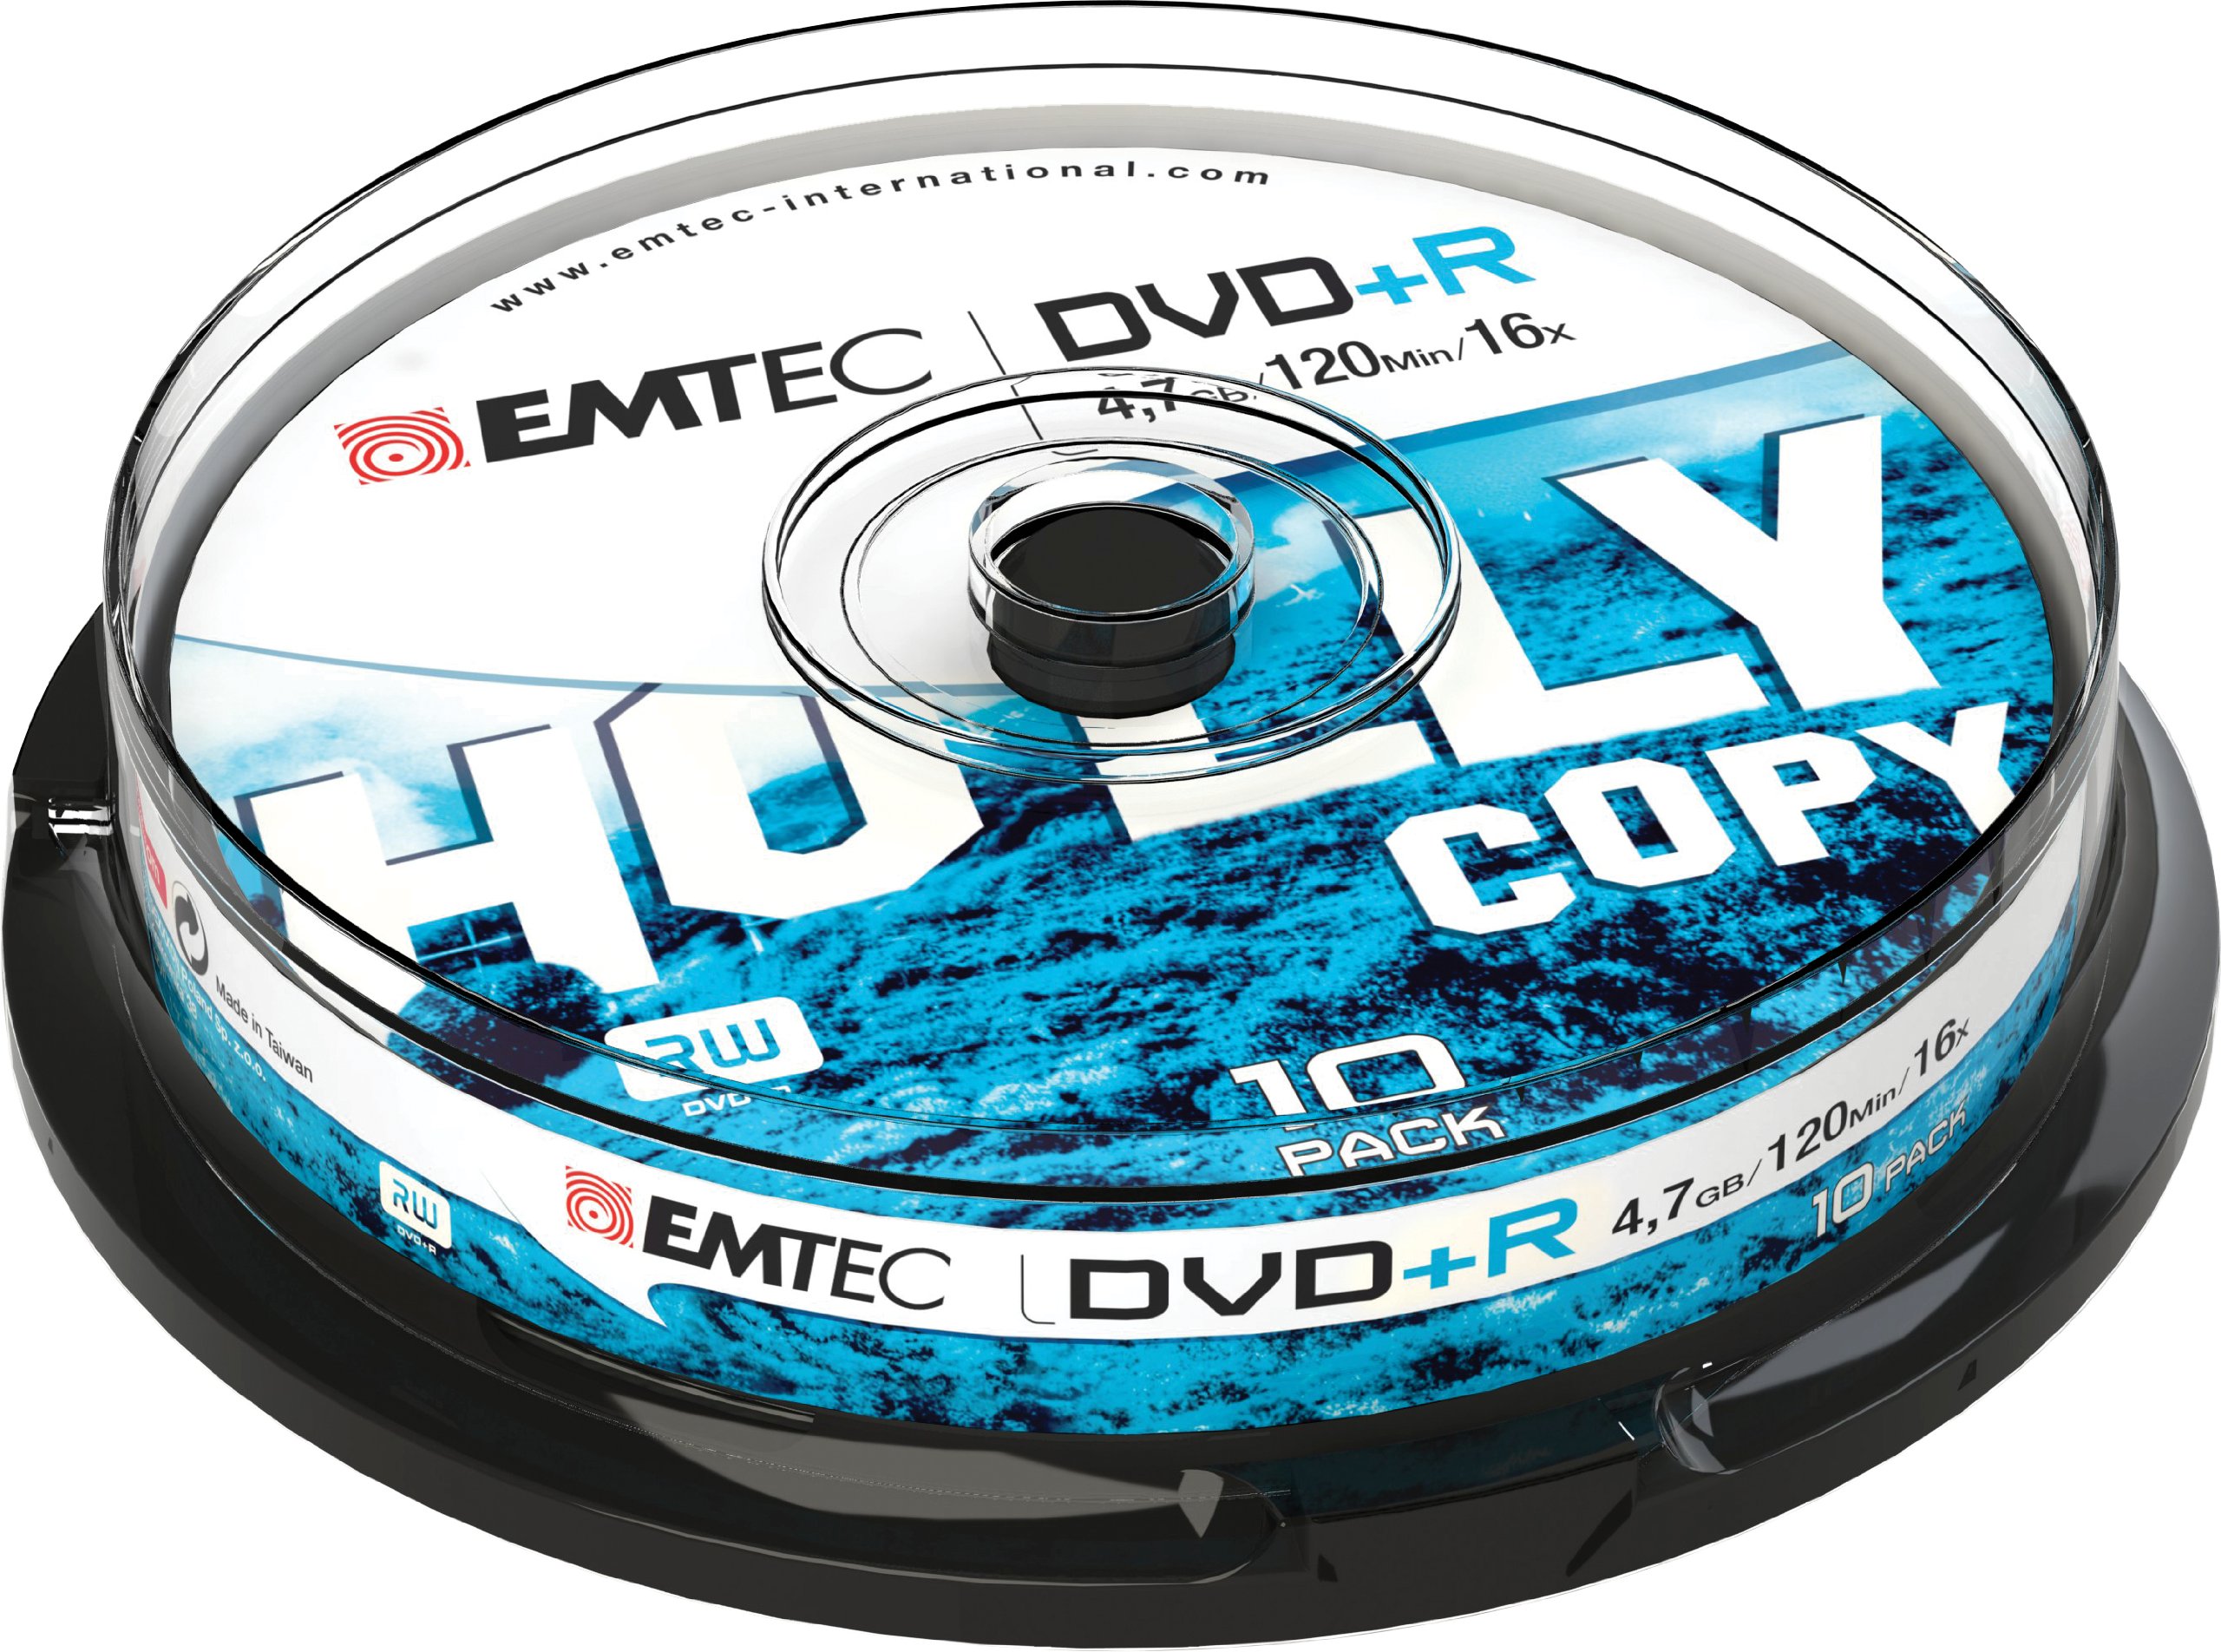 Emtec - DVD+R - registrabile, 4,7GB, 16x spindle - conf. 10 pz